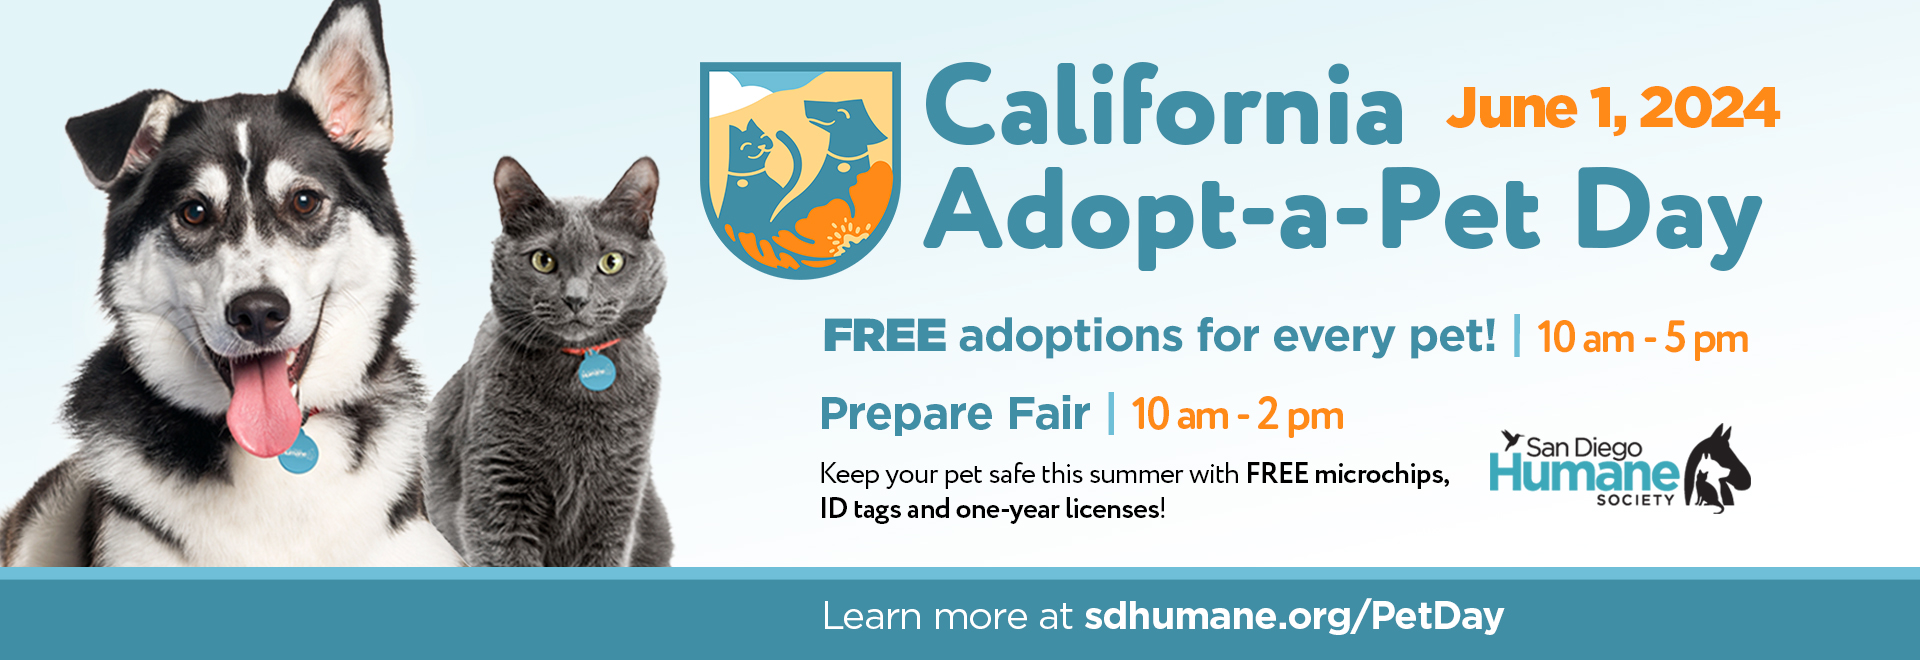 California Adopt-a-Pet Day | June 1, 2024